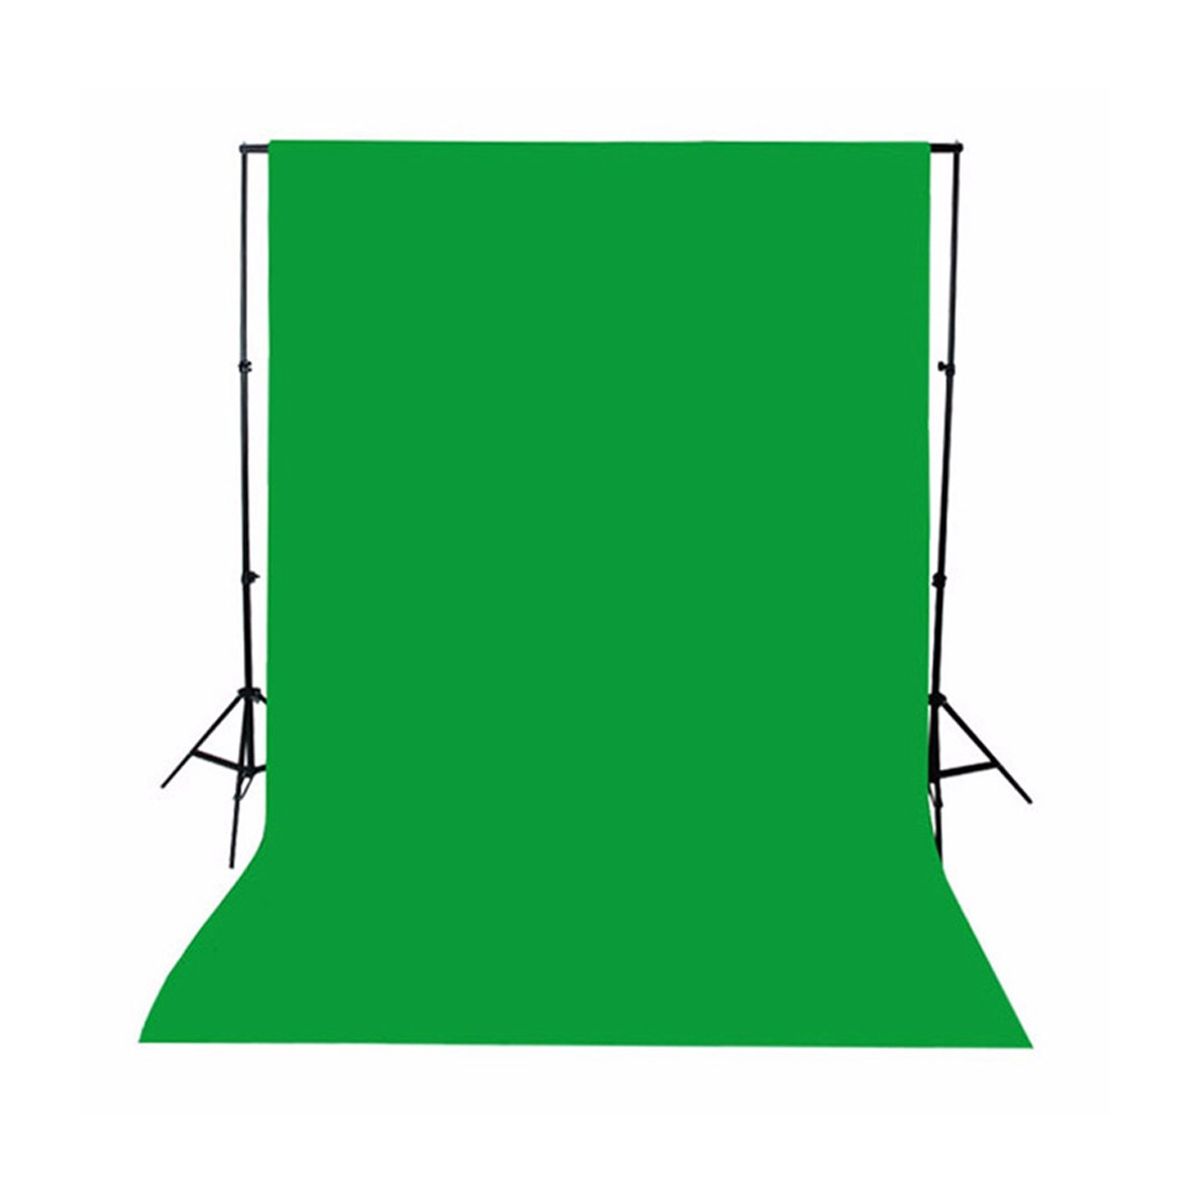 300x160cm-Non-woven-Fabrics-Chromakey-Green-Photography-Backdrop-Background-Cloth-for-Photography-Vi-1717330